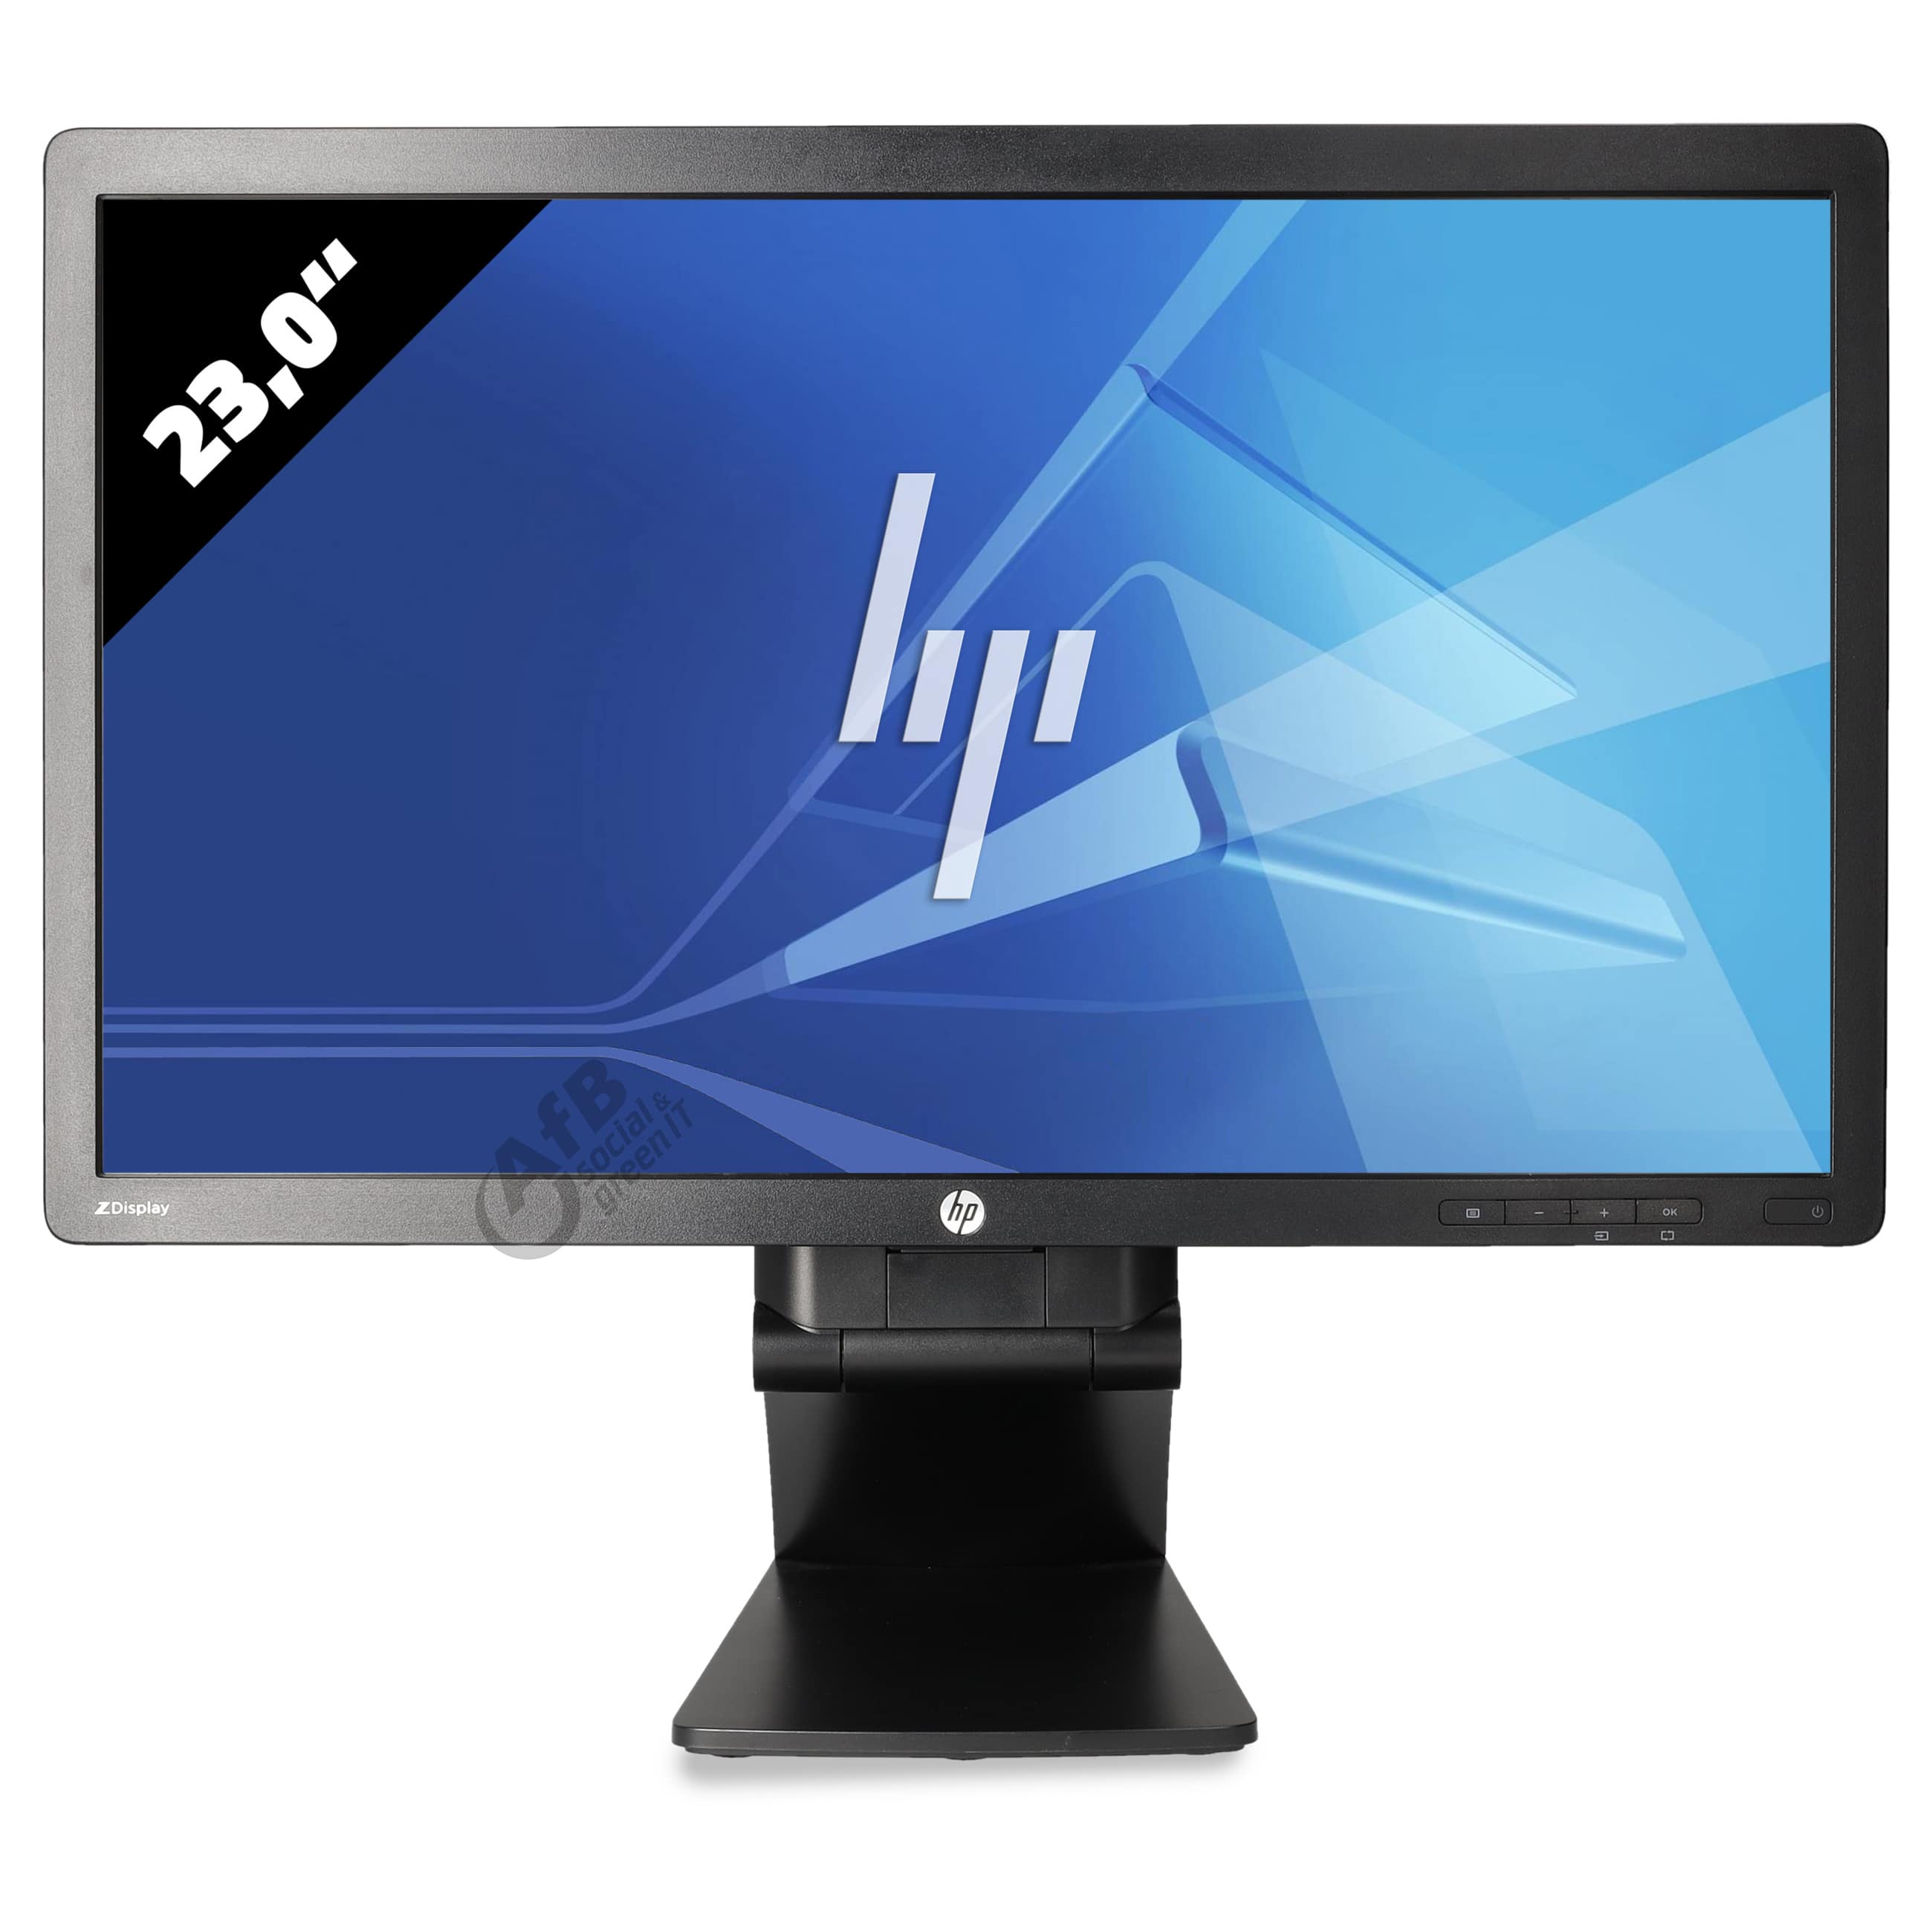 HP Z Display Z23i - 1920 x 1080 - FHD